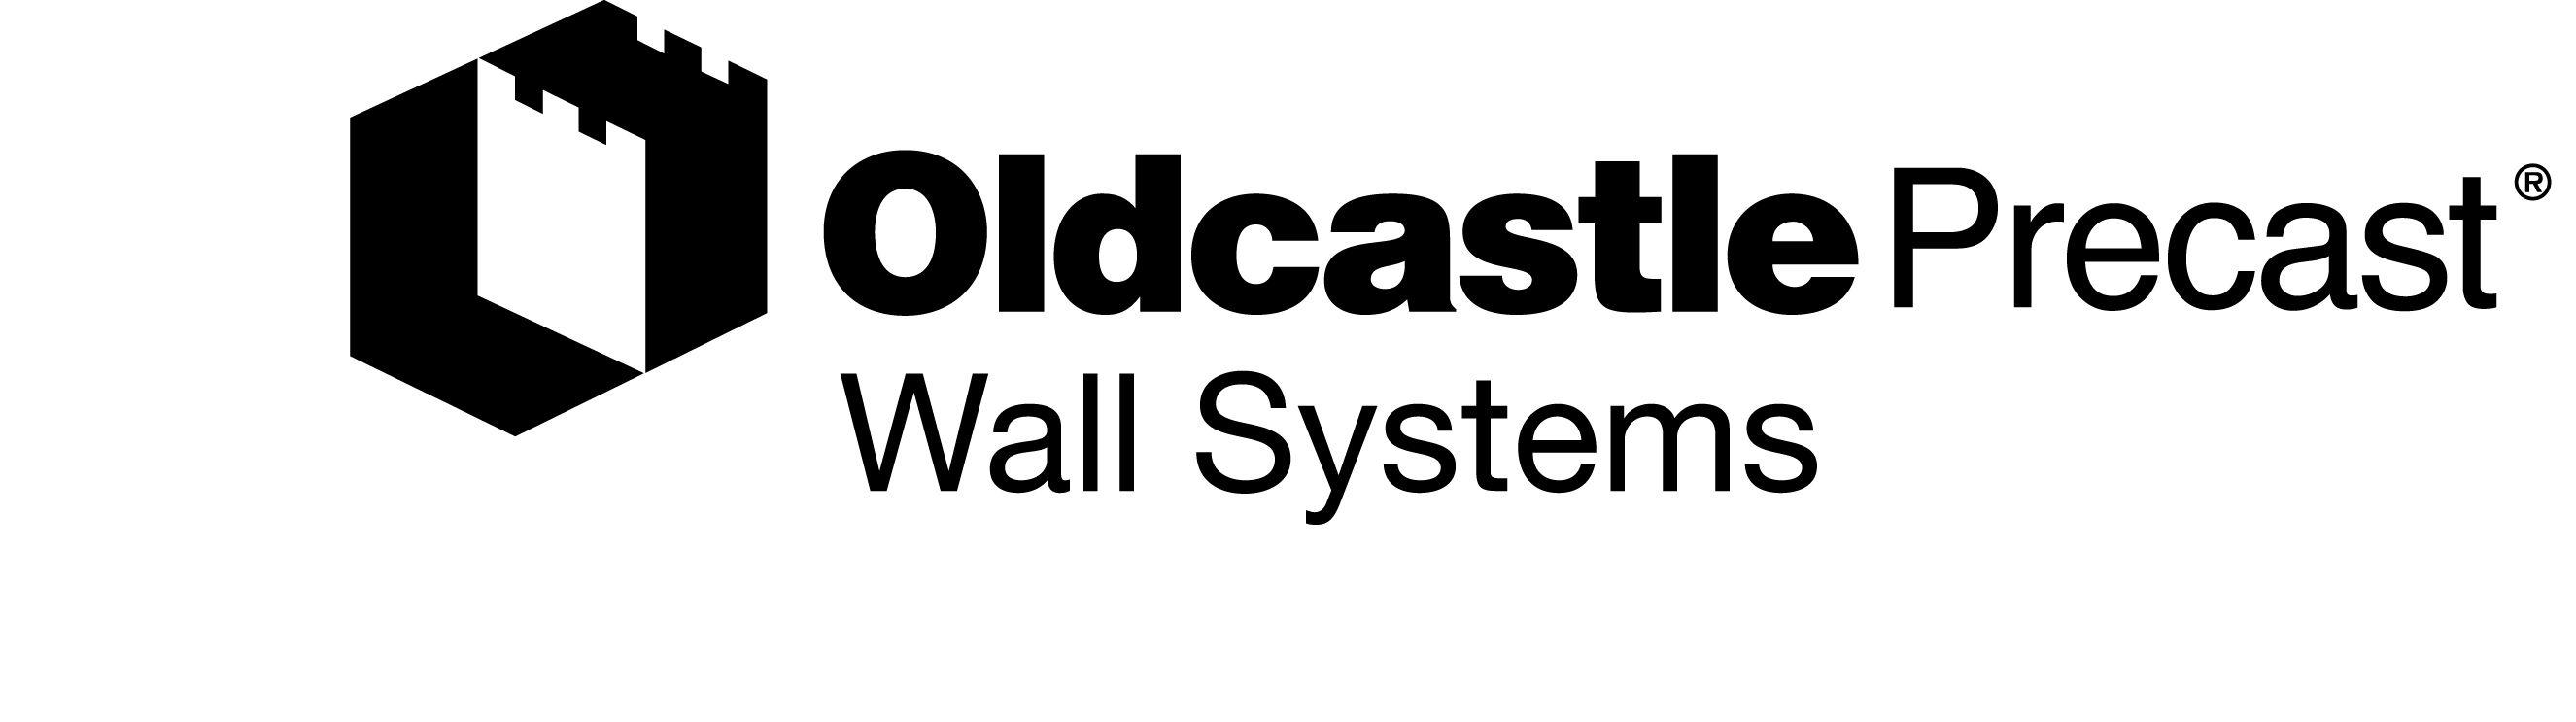 Oldcastle Logo - Logos. Oldcastle Precast Promotional Item E Store